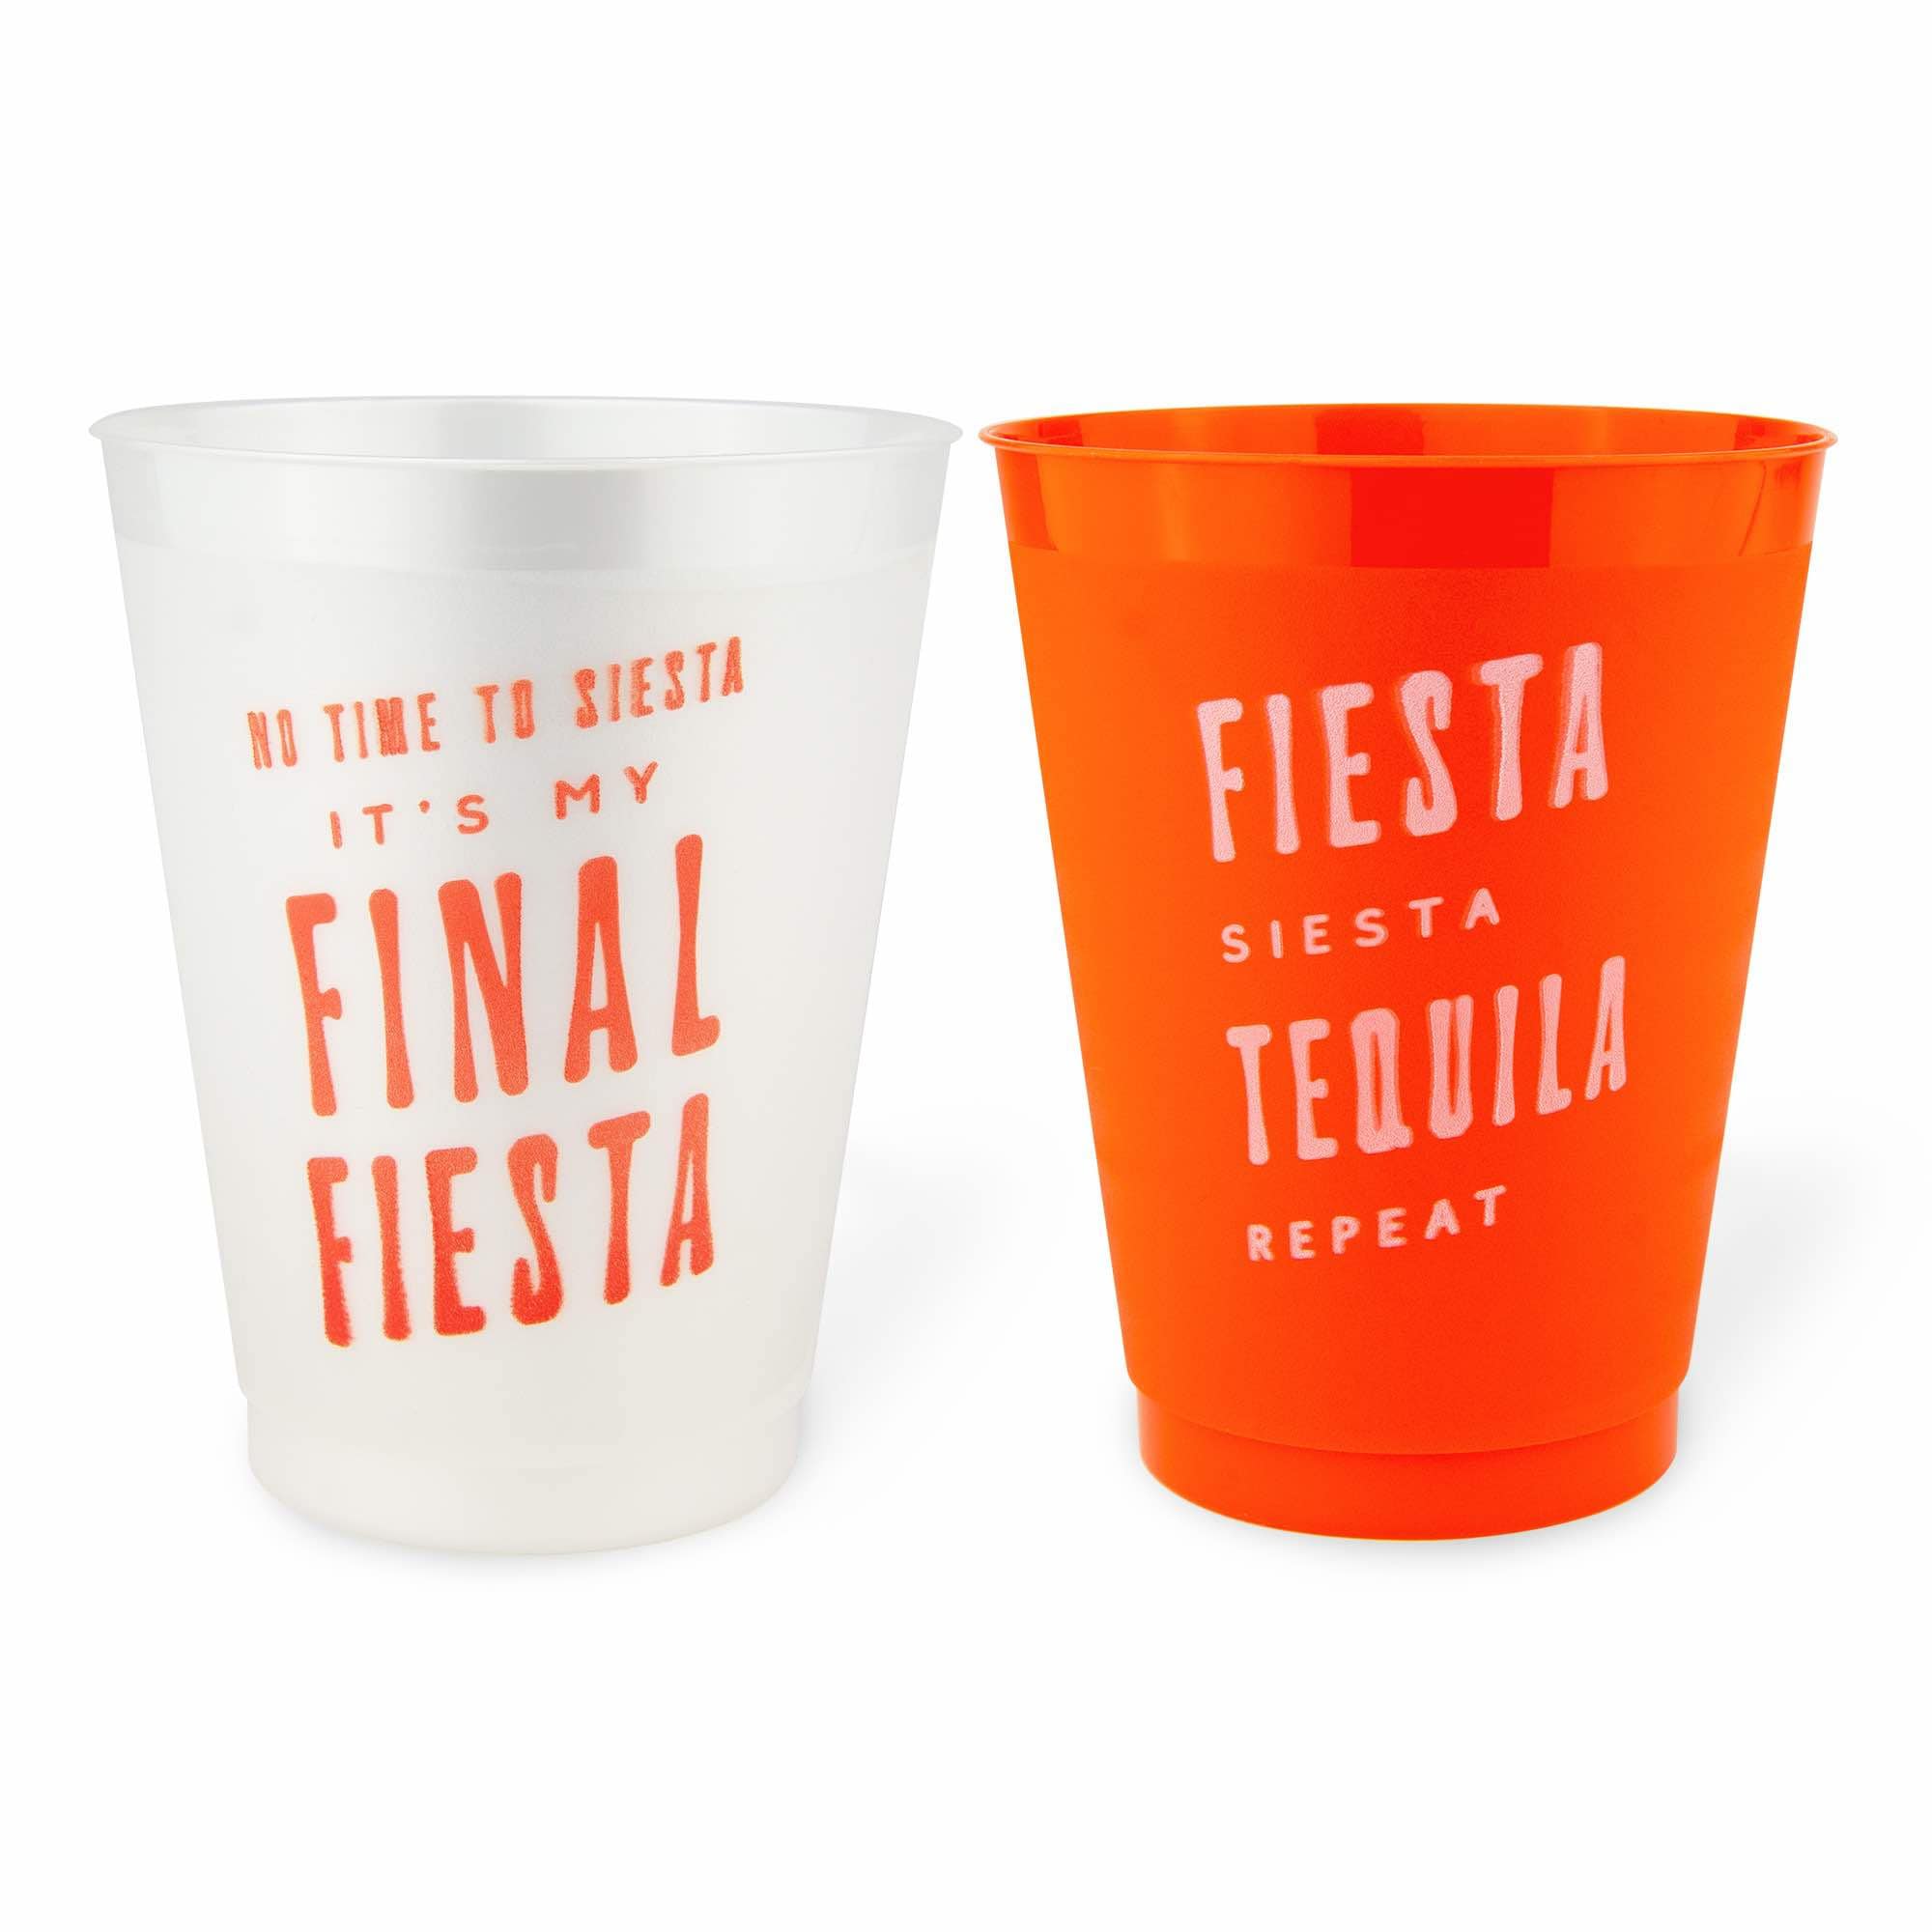 SALE! Fiesta Siesta Tequila Repeat Cinco De Mayo - Set of 10 Cups